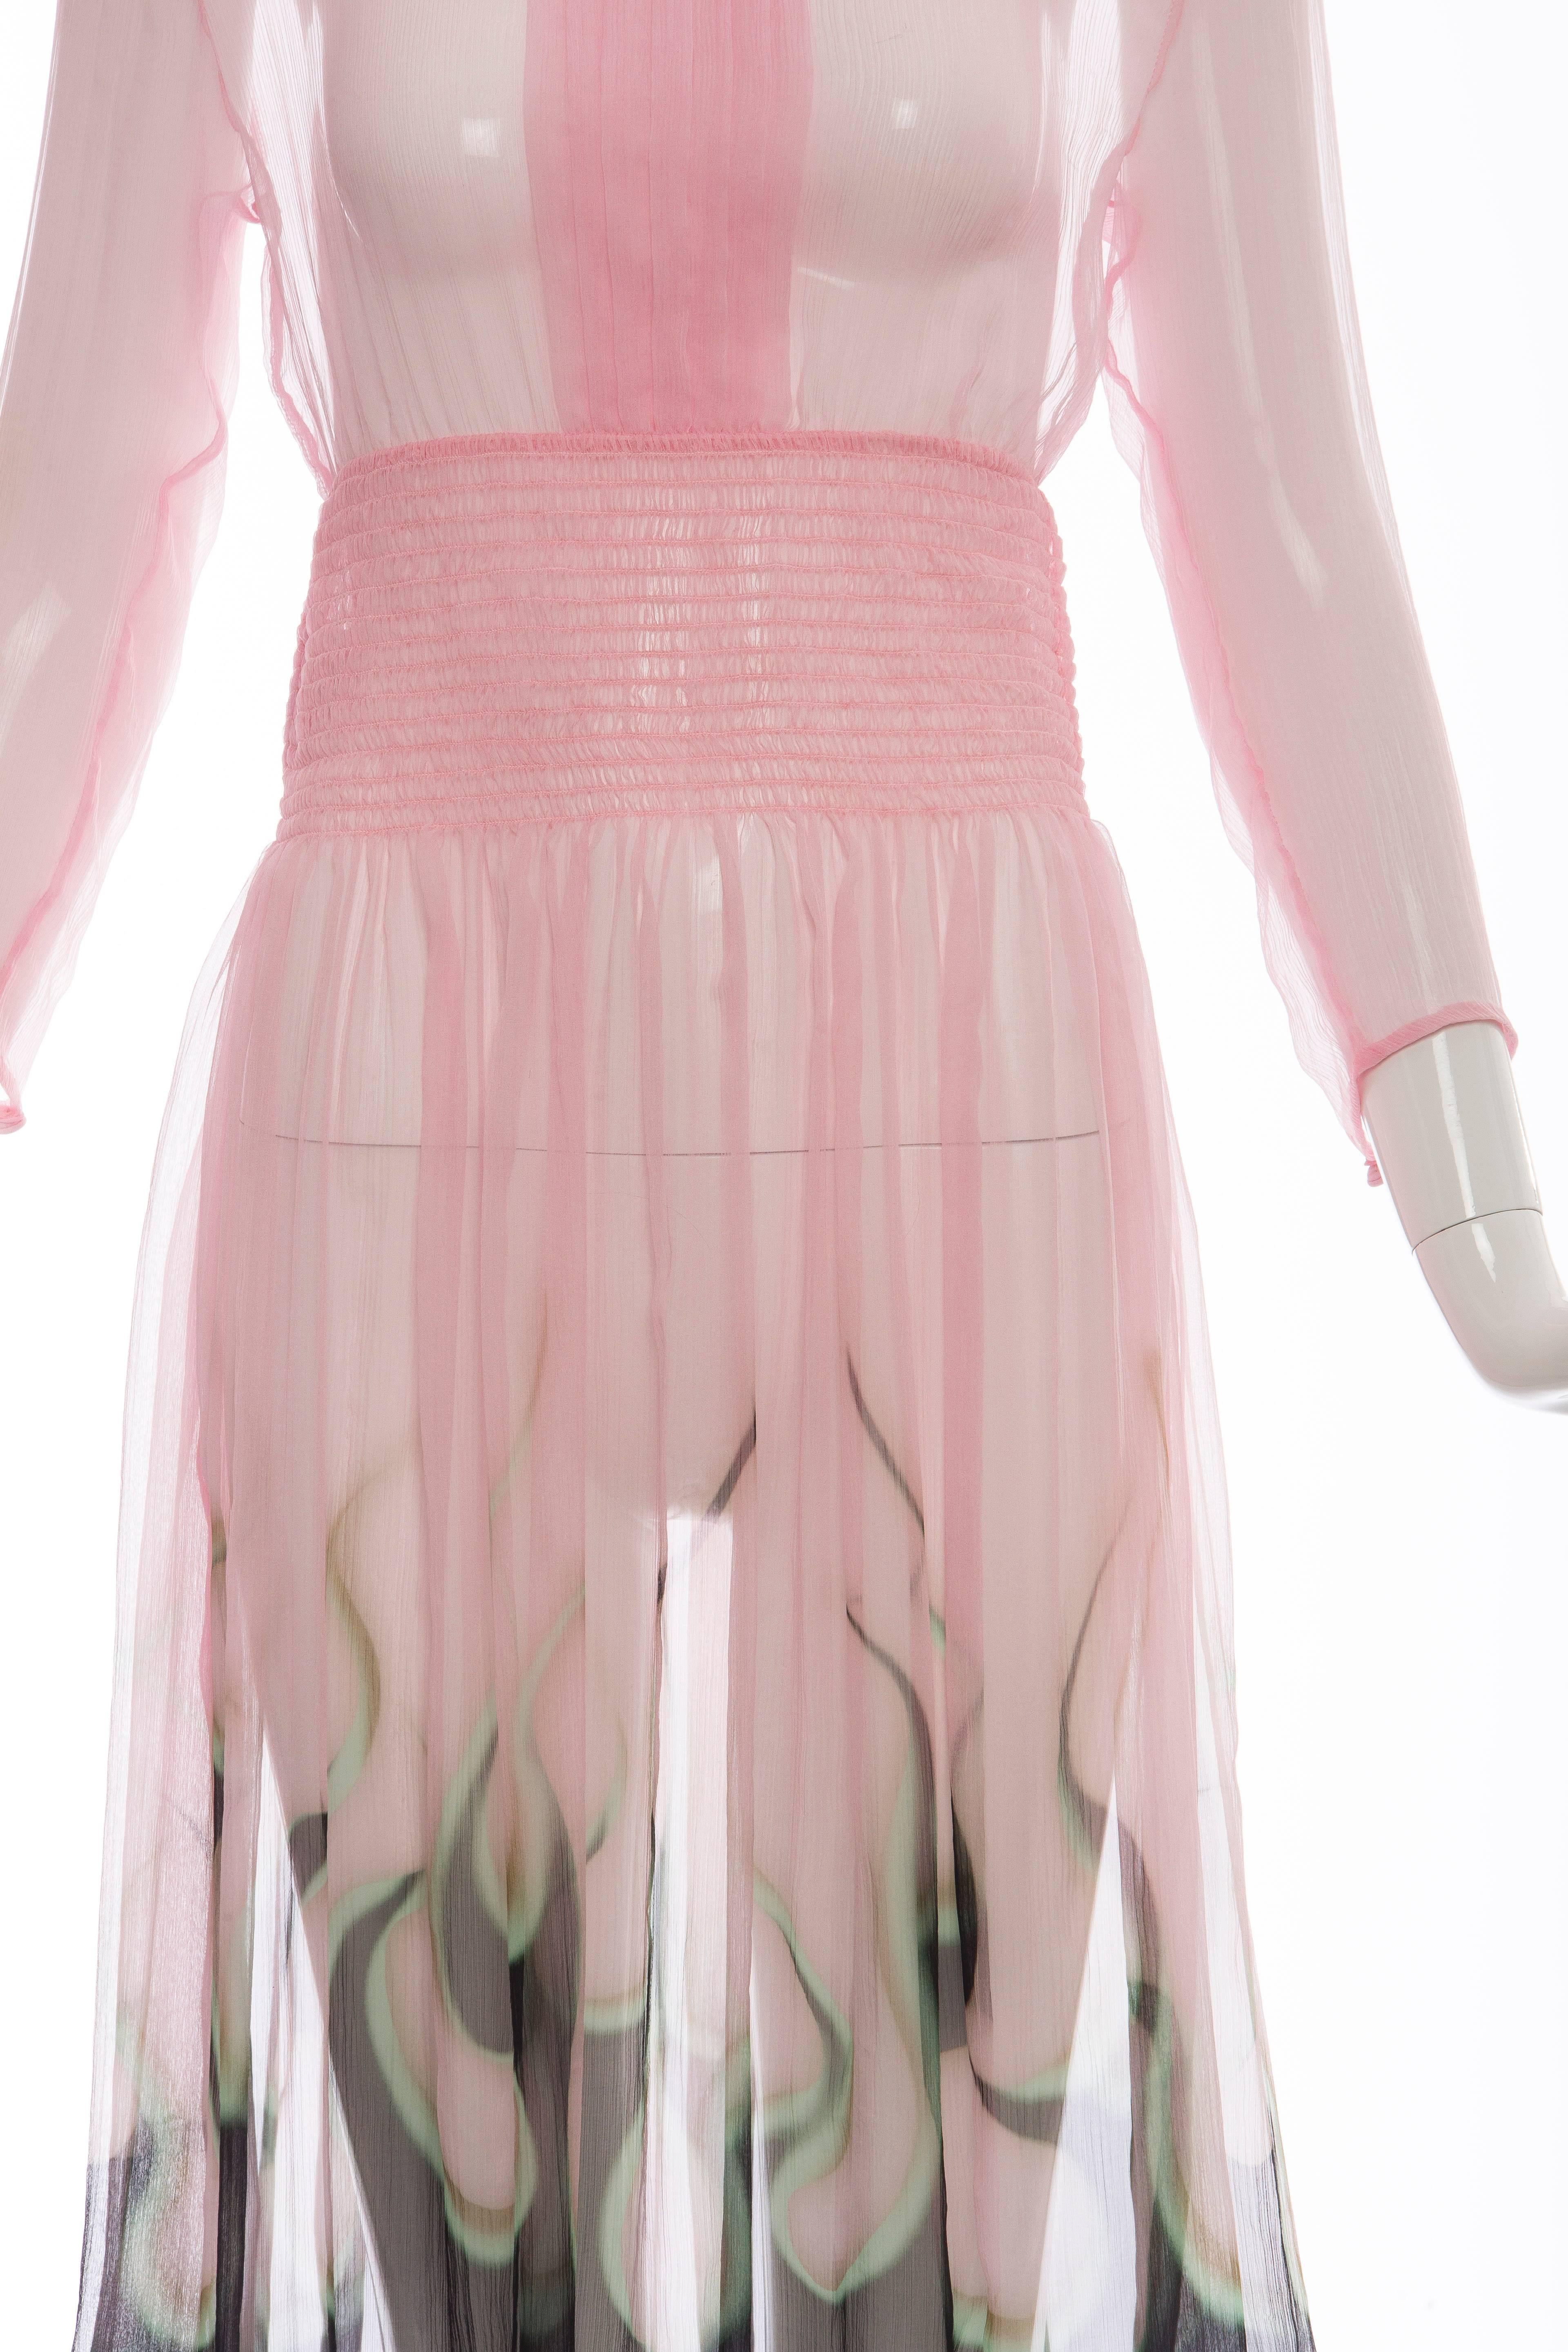 Beige Prada Pink Silk Chiffon Dress With Flame Print At Hem, Spring 2012